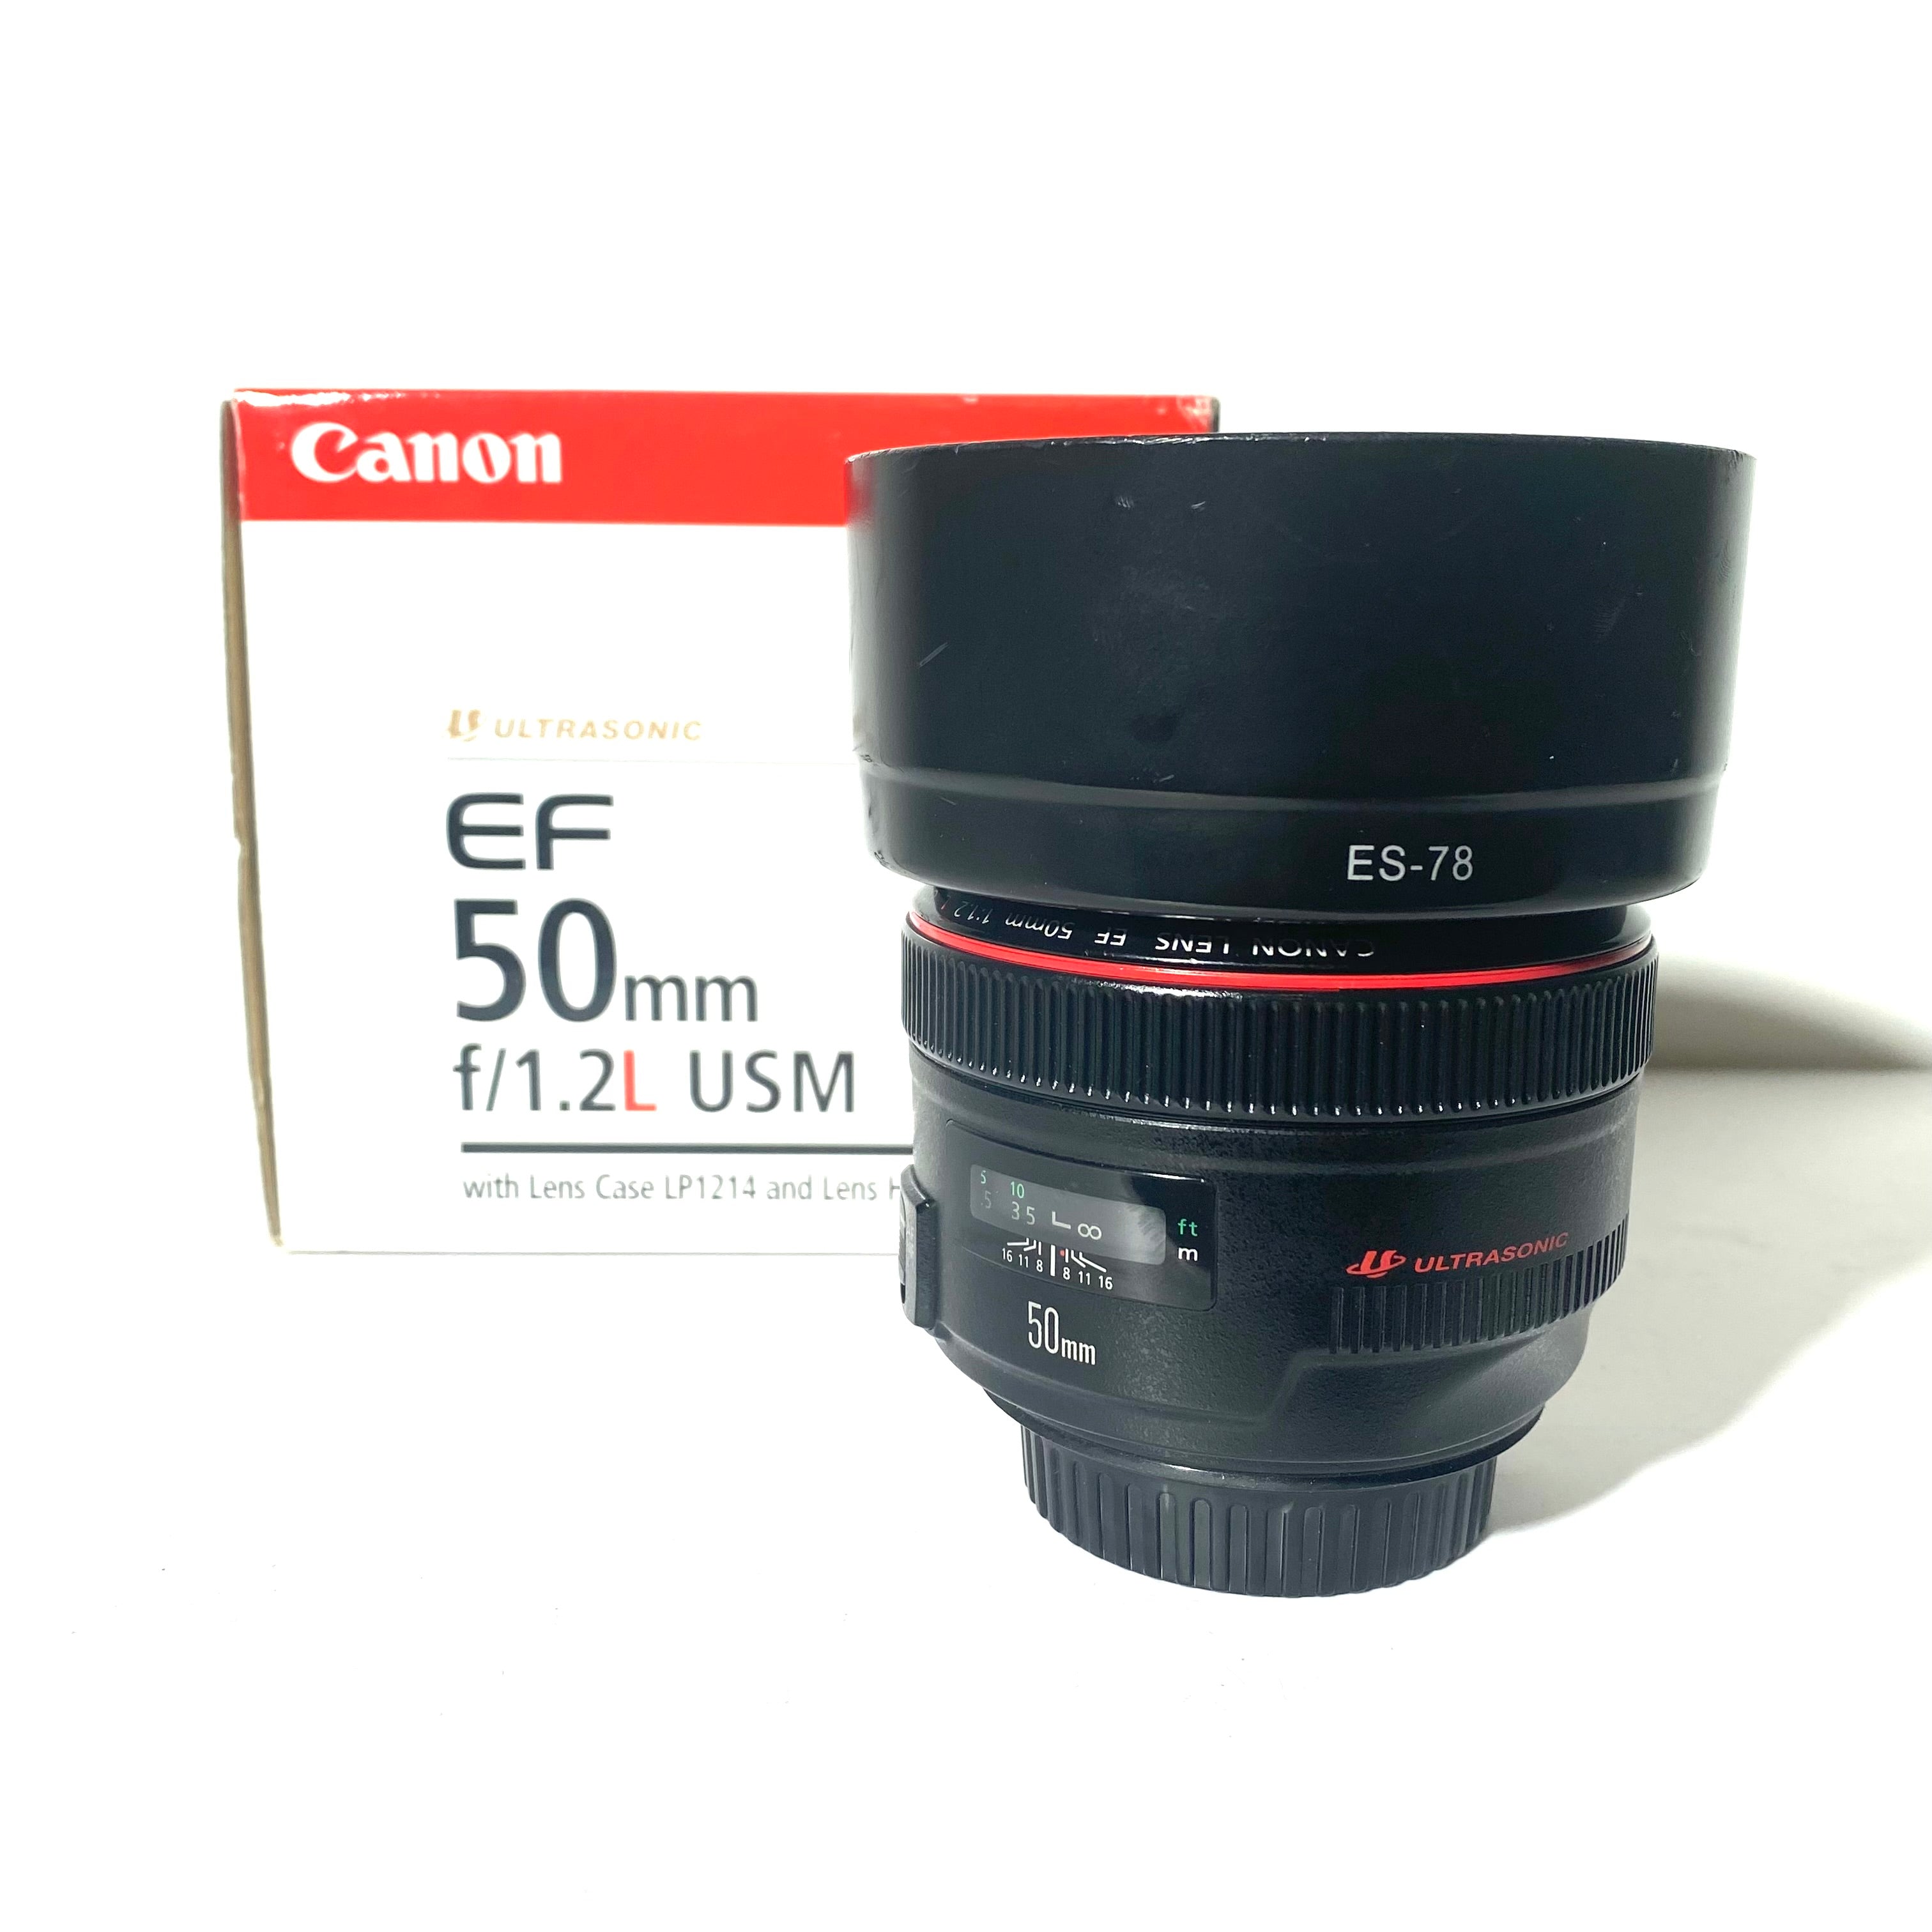 Canon Ef 50mm f/1.2L USM usato